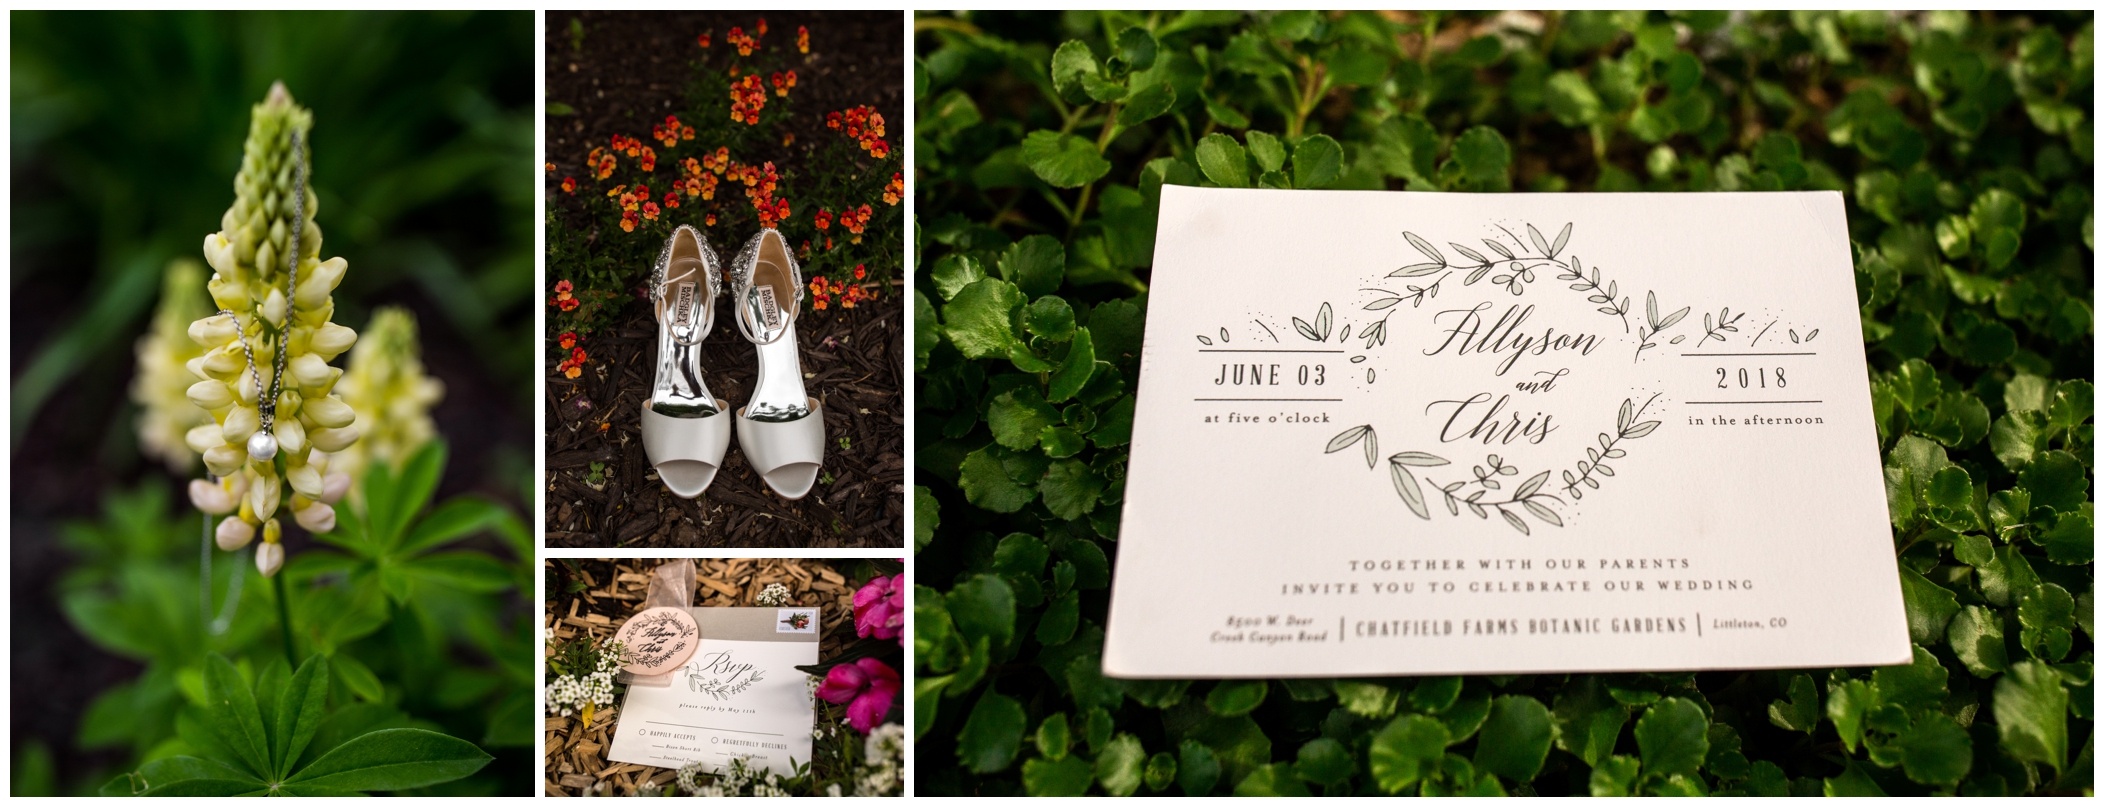 garden wedding invitation at Chatfield Botanic Gardens